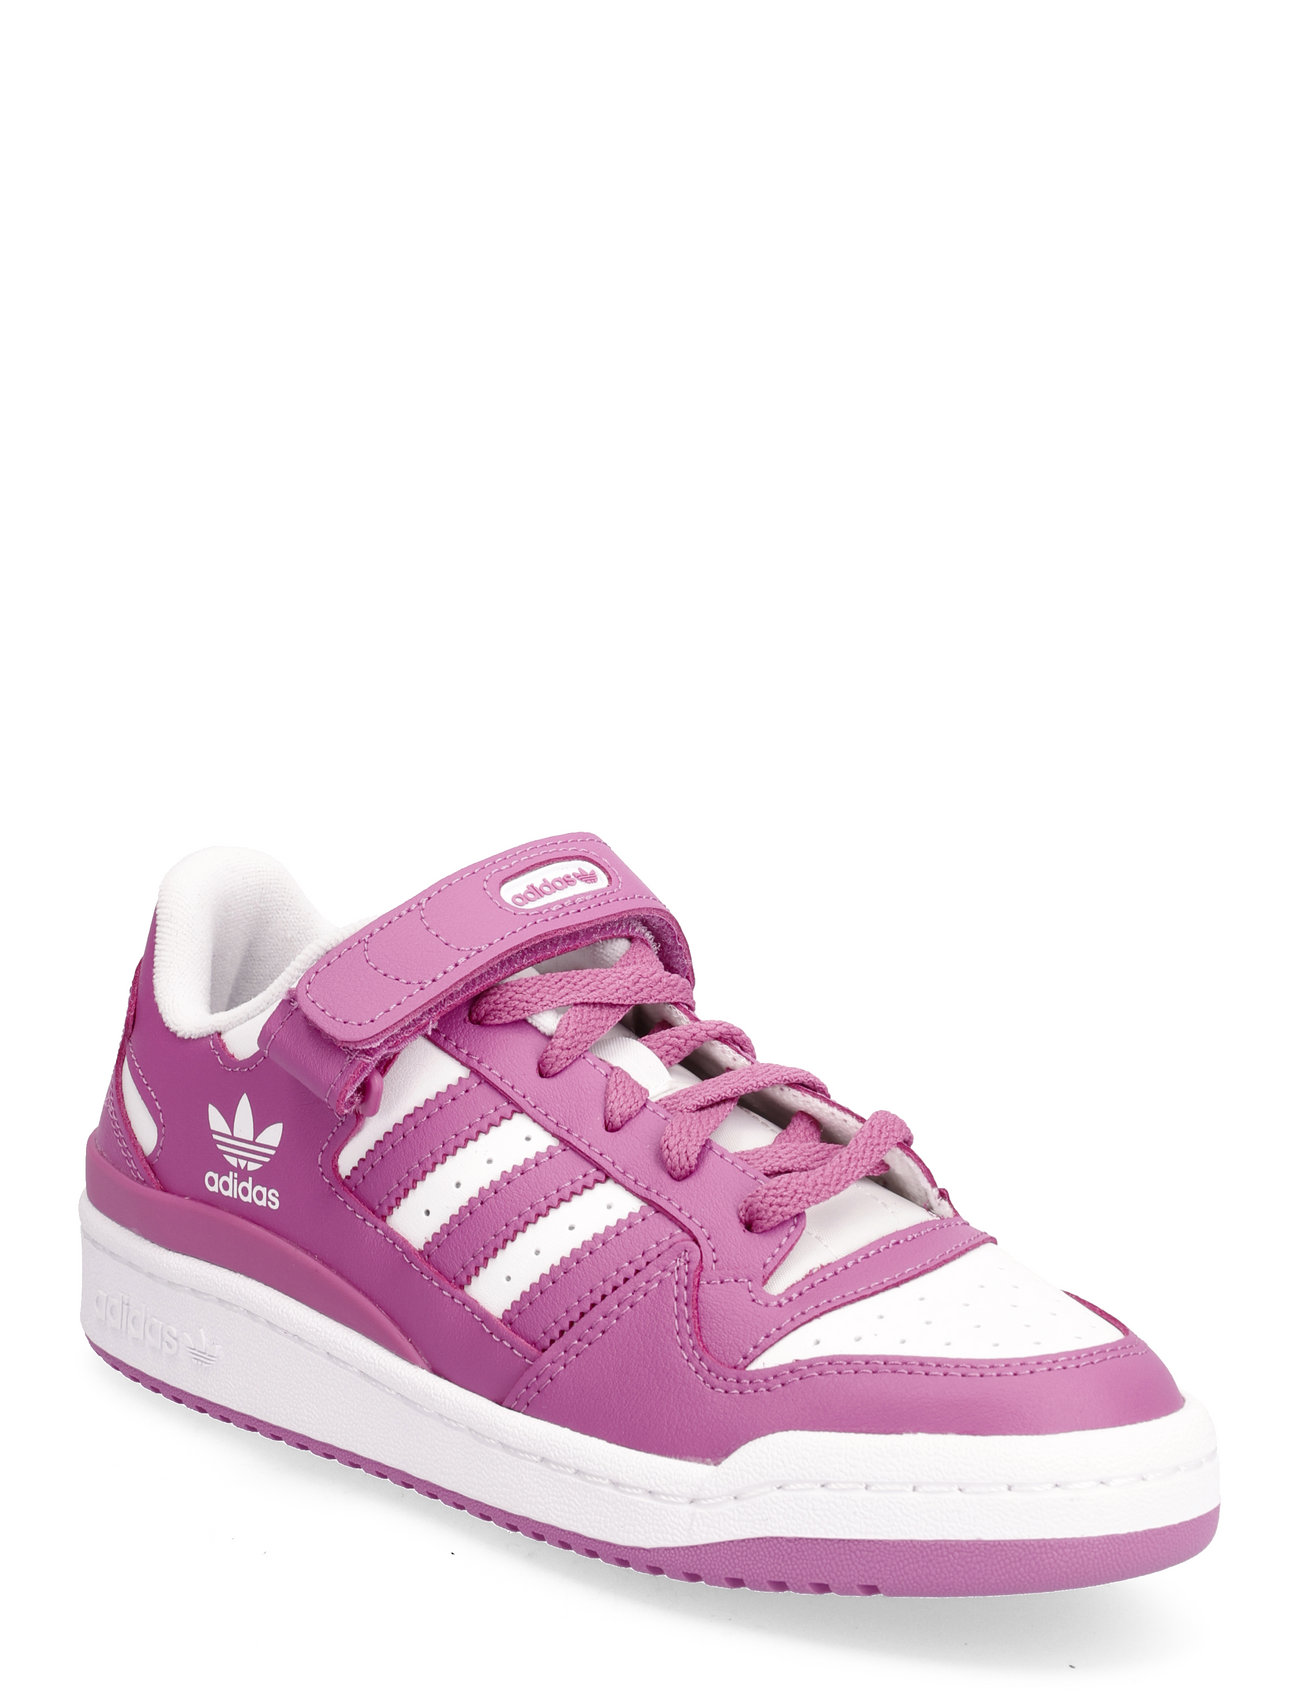 Forum Low Shoes Sport Sneakers Low-top Sneakers Pink Adidas Originals